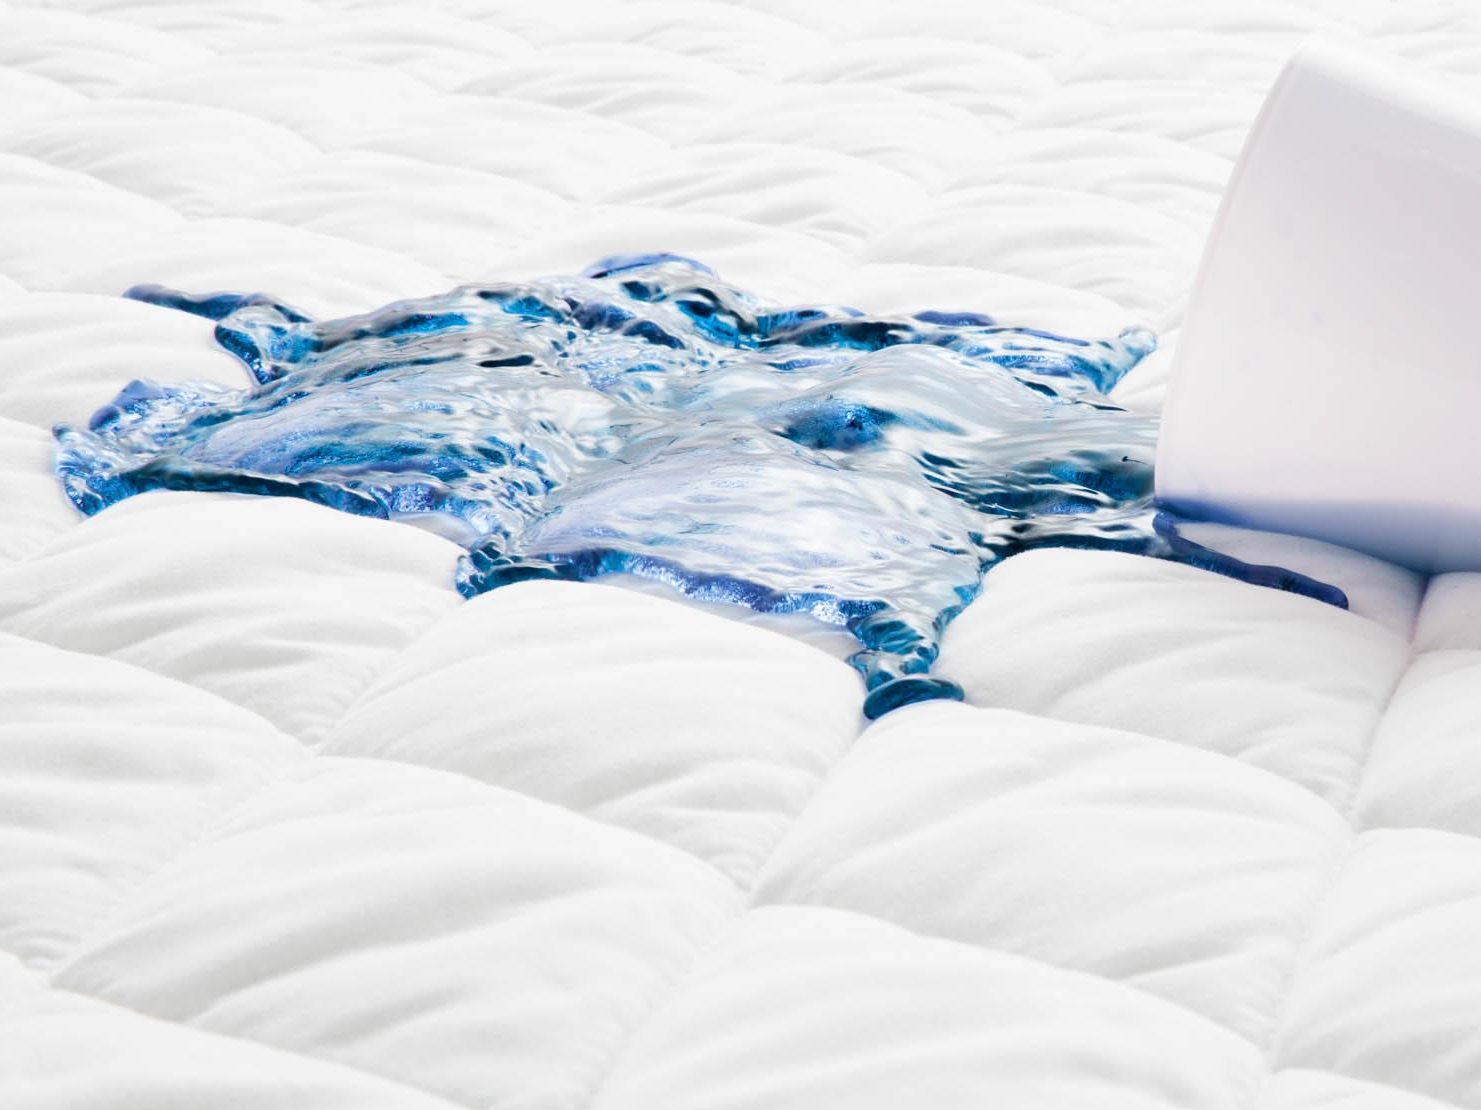 Cubre colchón impermeable: ¿Por qué es tan imprescindible?